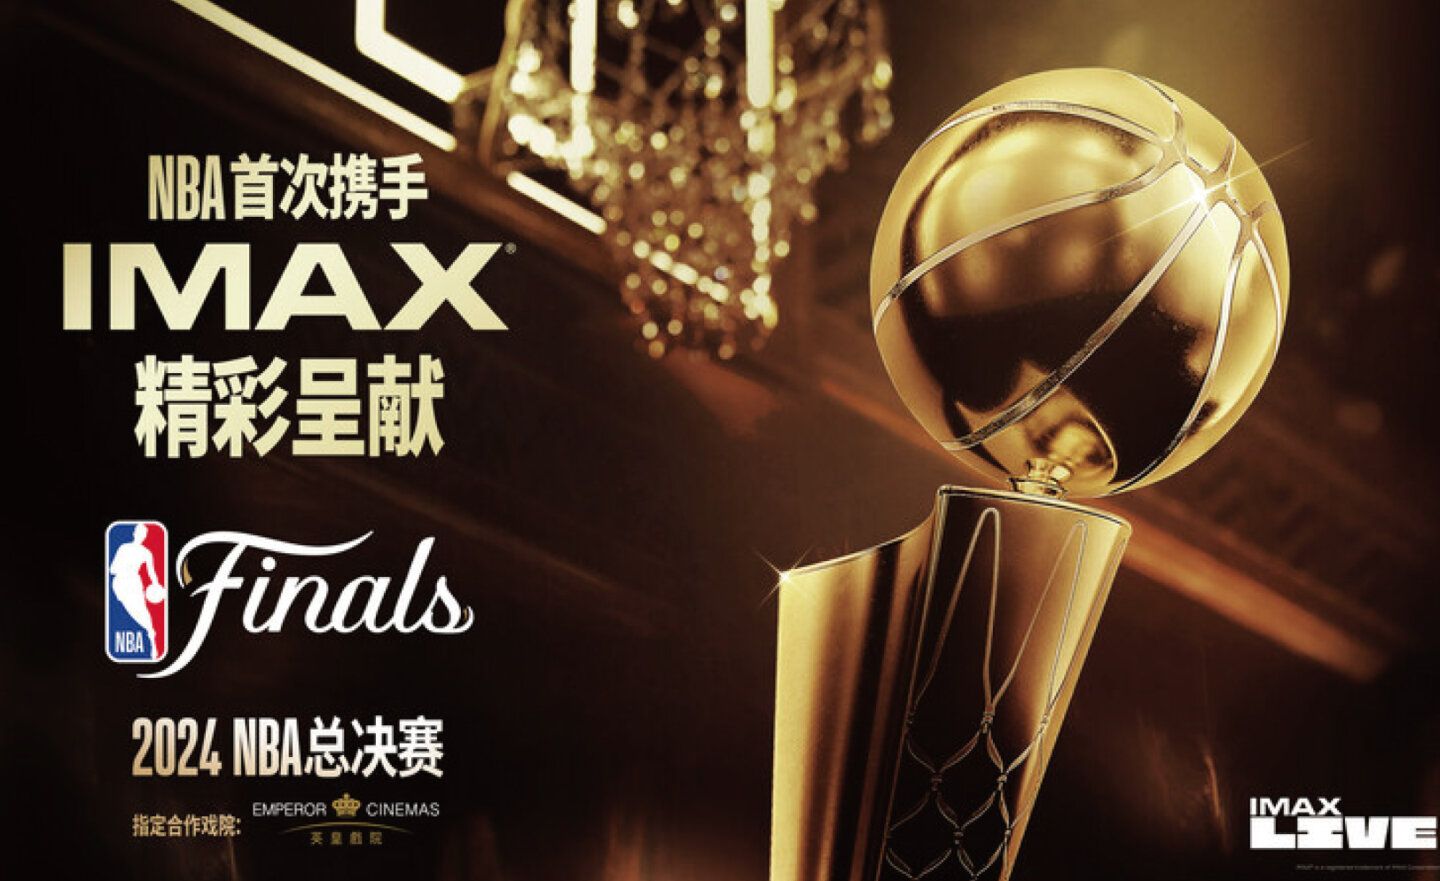 2024 NBA 總決賽將以 LIVE 實況直播登陸香港英皇戲院 IMAX